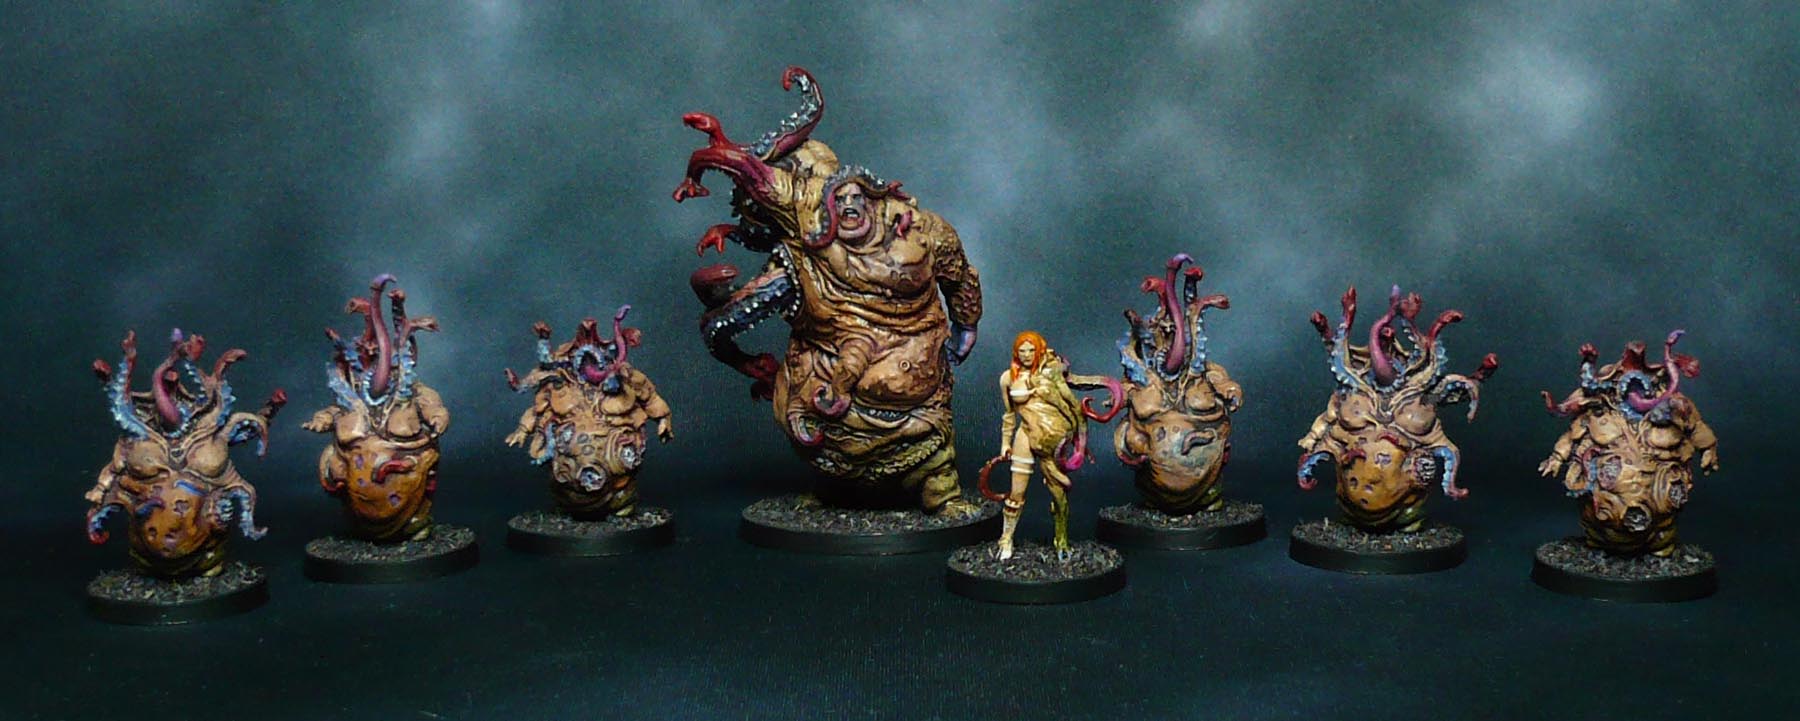 7 Sins GLUTTONY AVATAR Horror Miniature Figure CMON New!! The Others